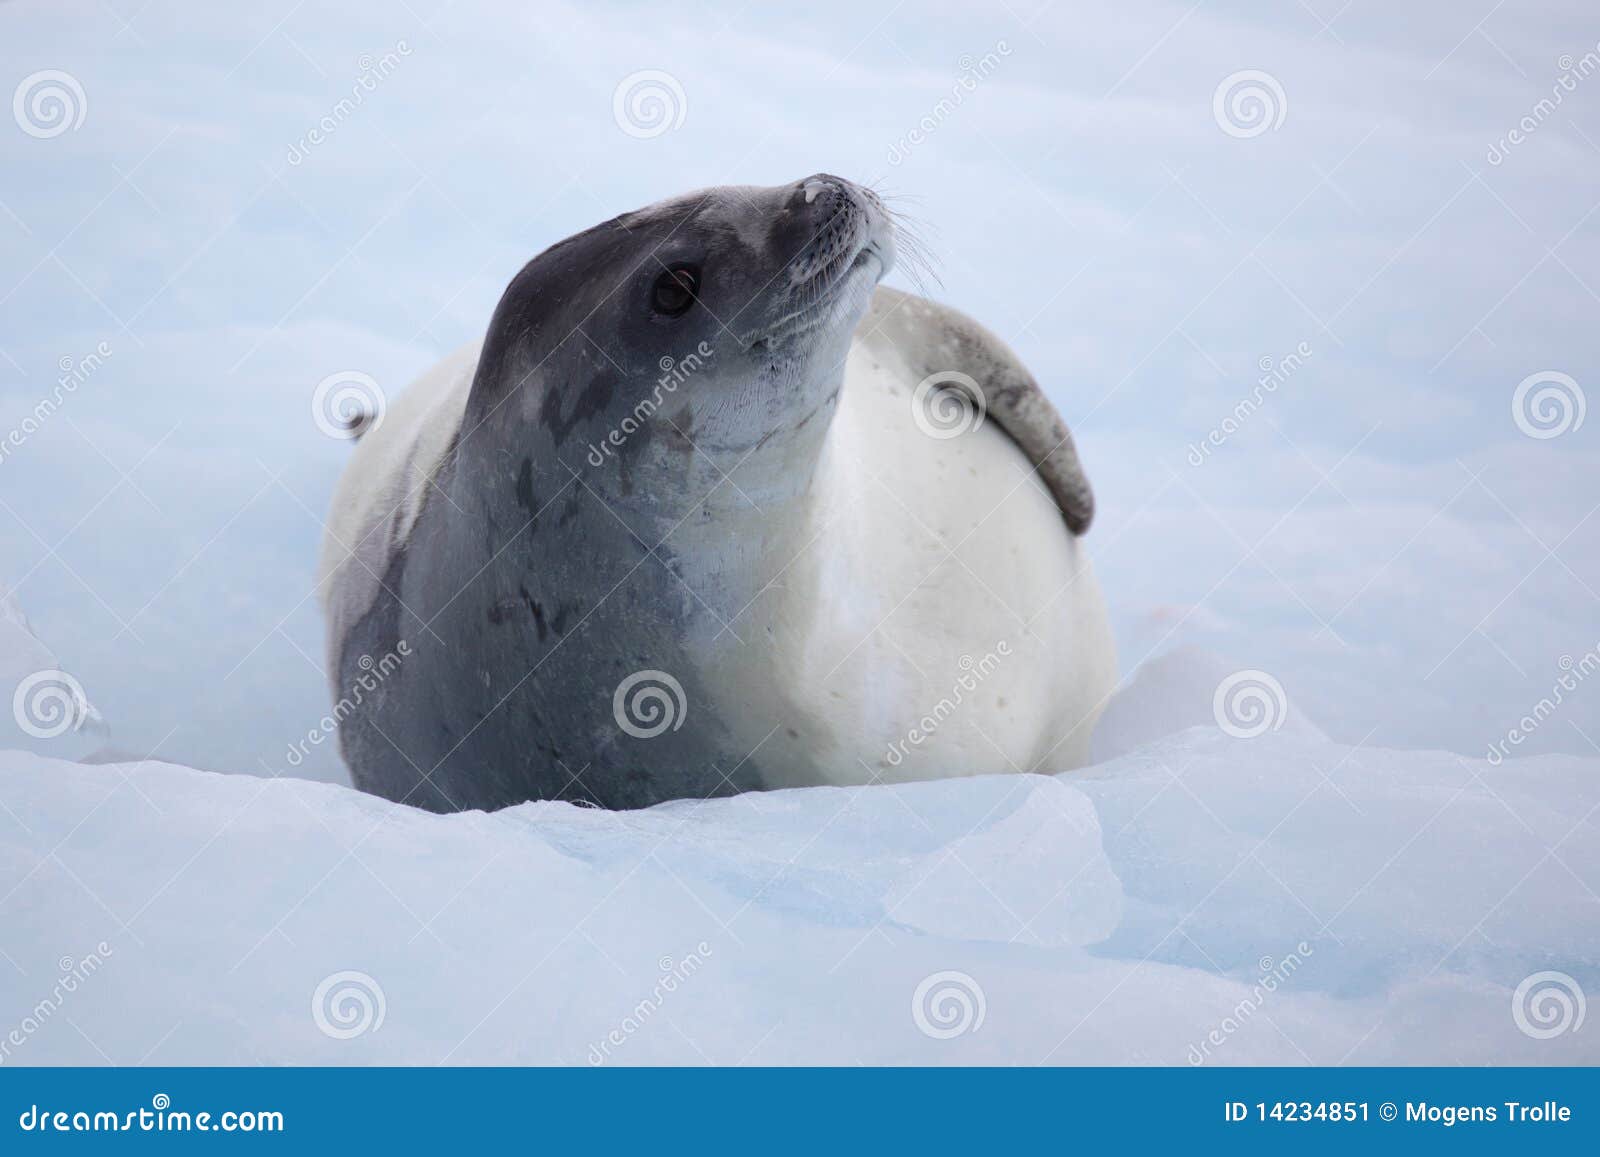 crabeater seal on ice floe, antarctica